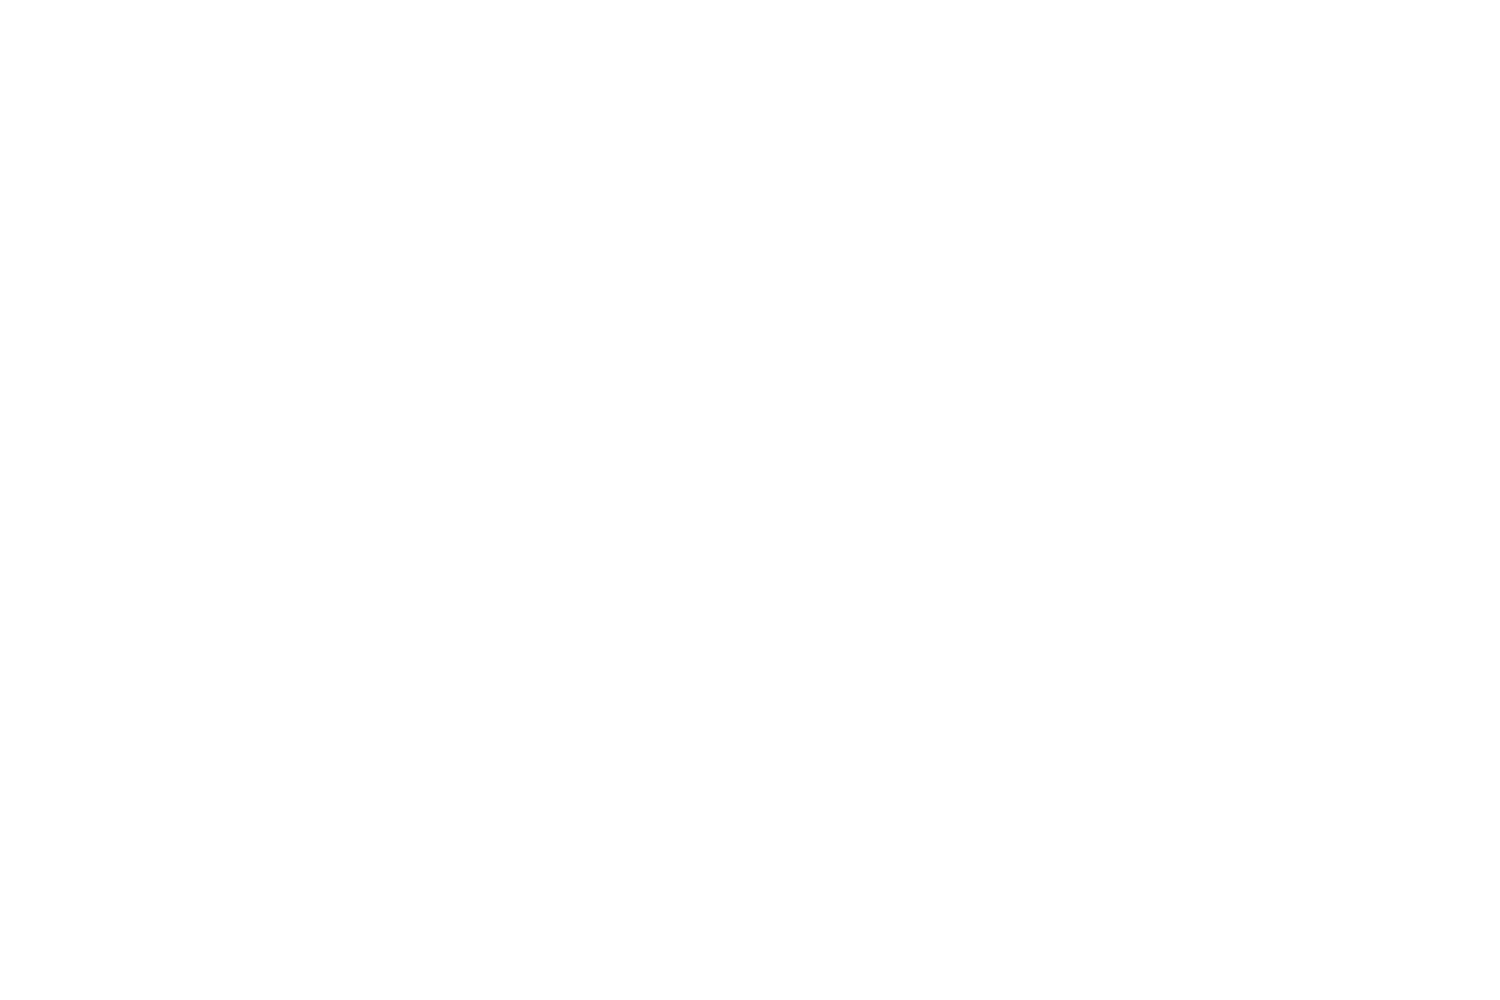 Spring-Global-CoachAI-Logo-TM-1